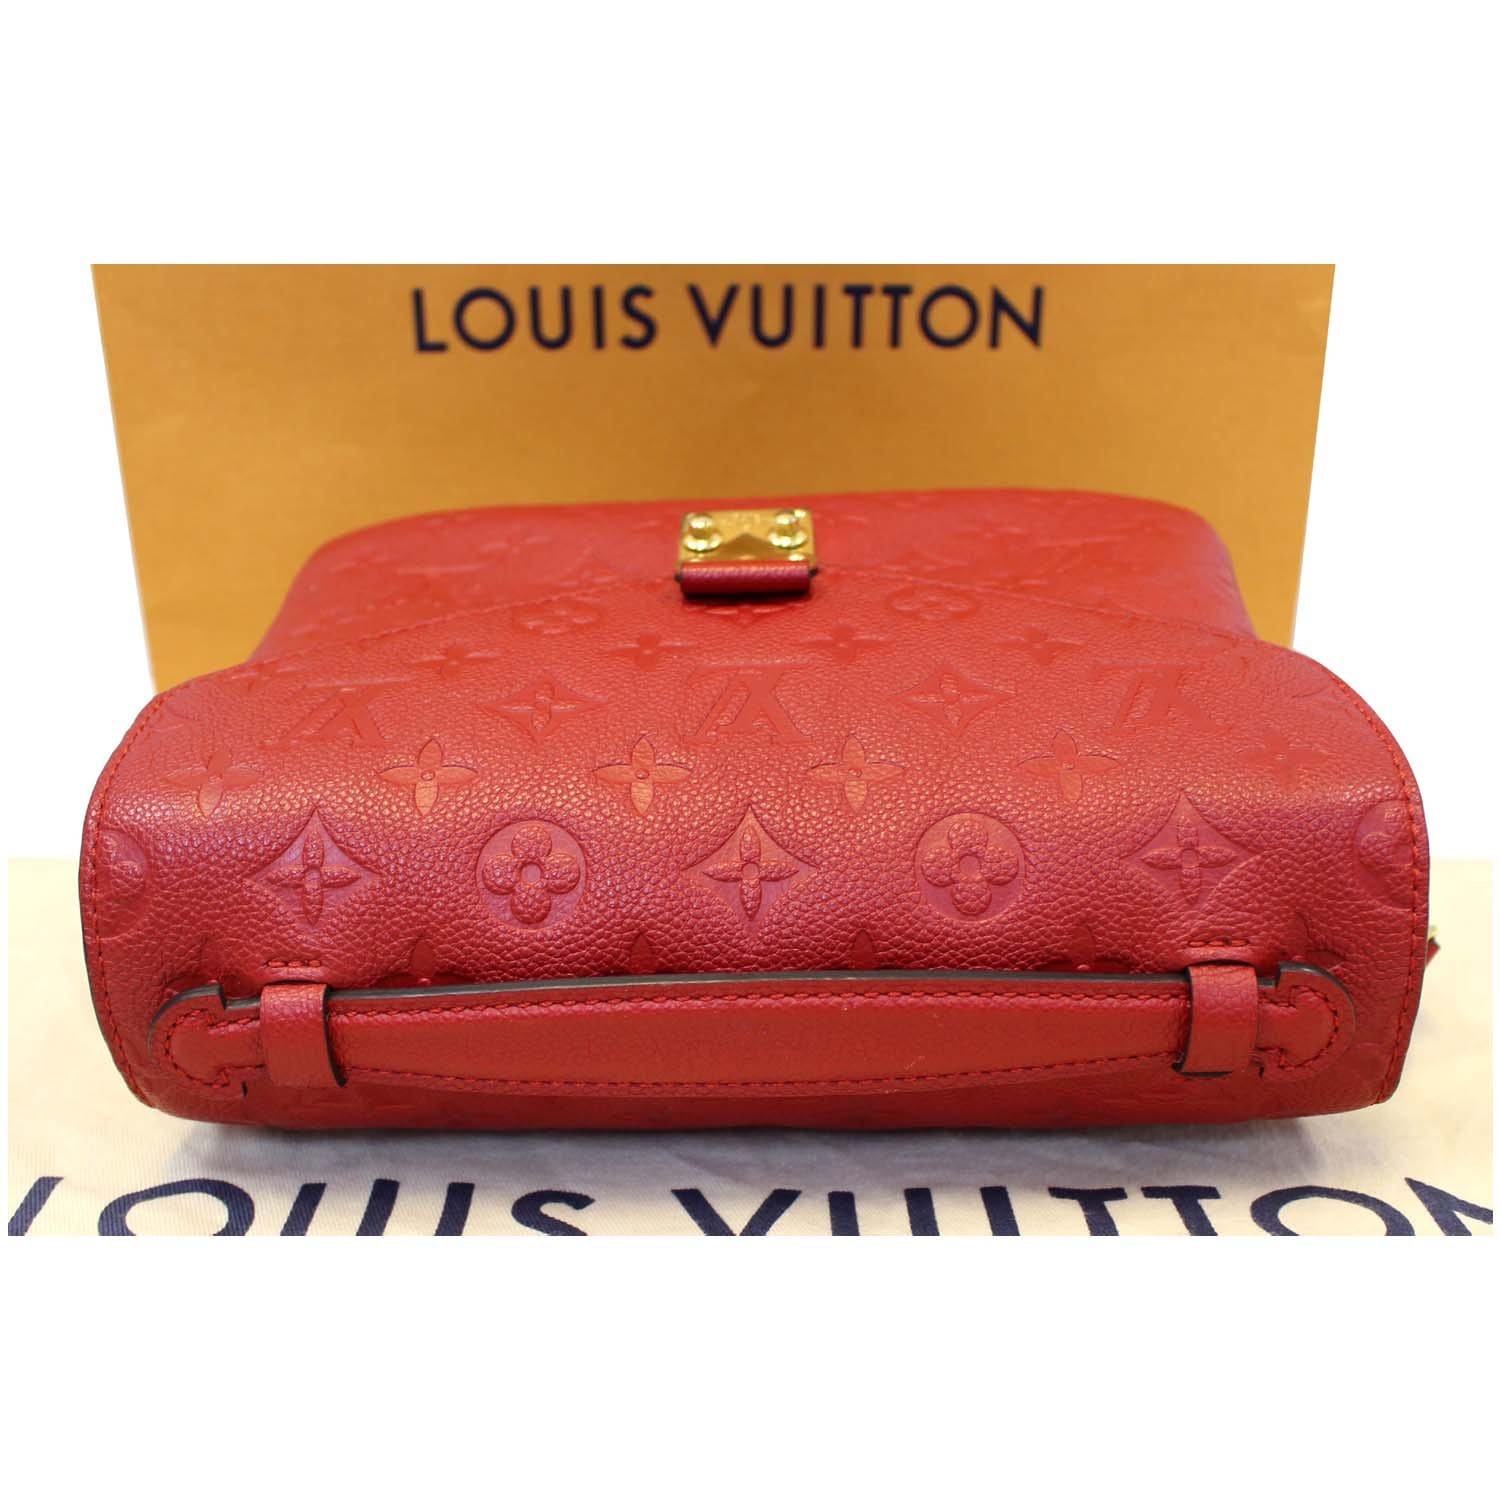 LV pochette metis bag  Bags, Louis vuitton handbags sale, Louis vuitton bag